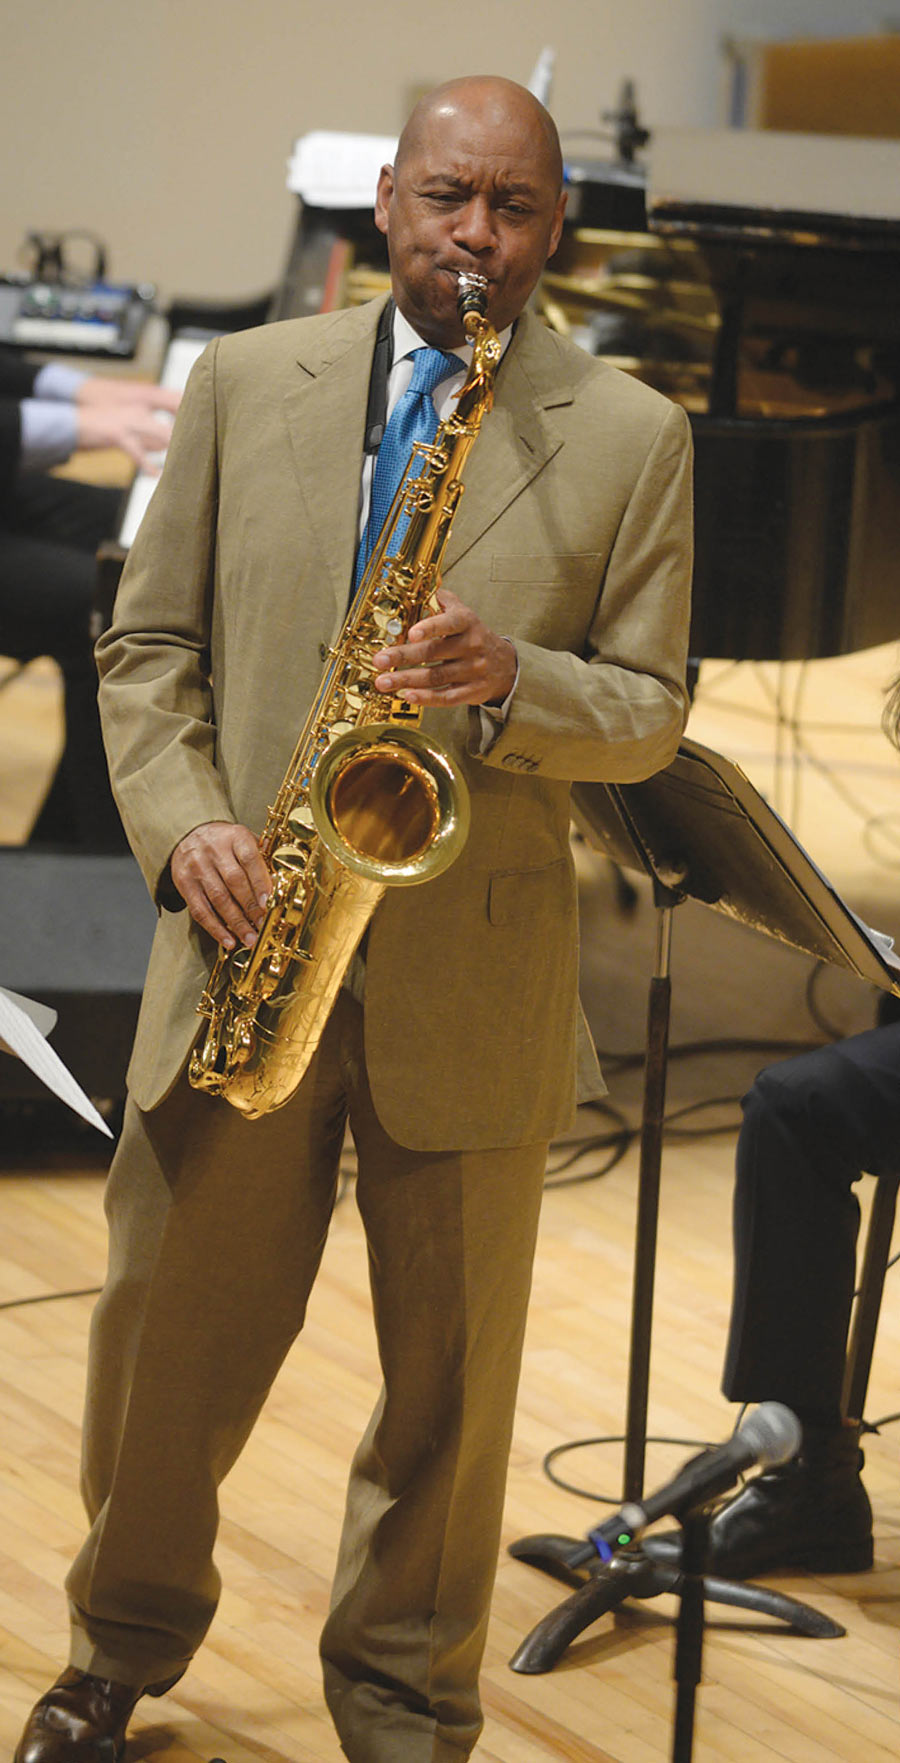 Branford Marsalis playing the saxophone on stage